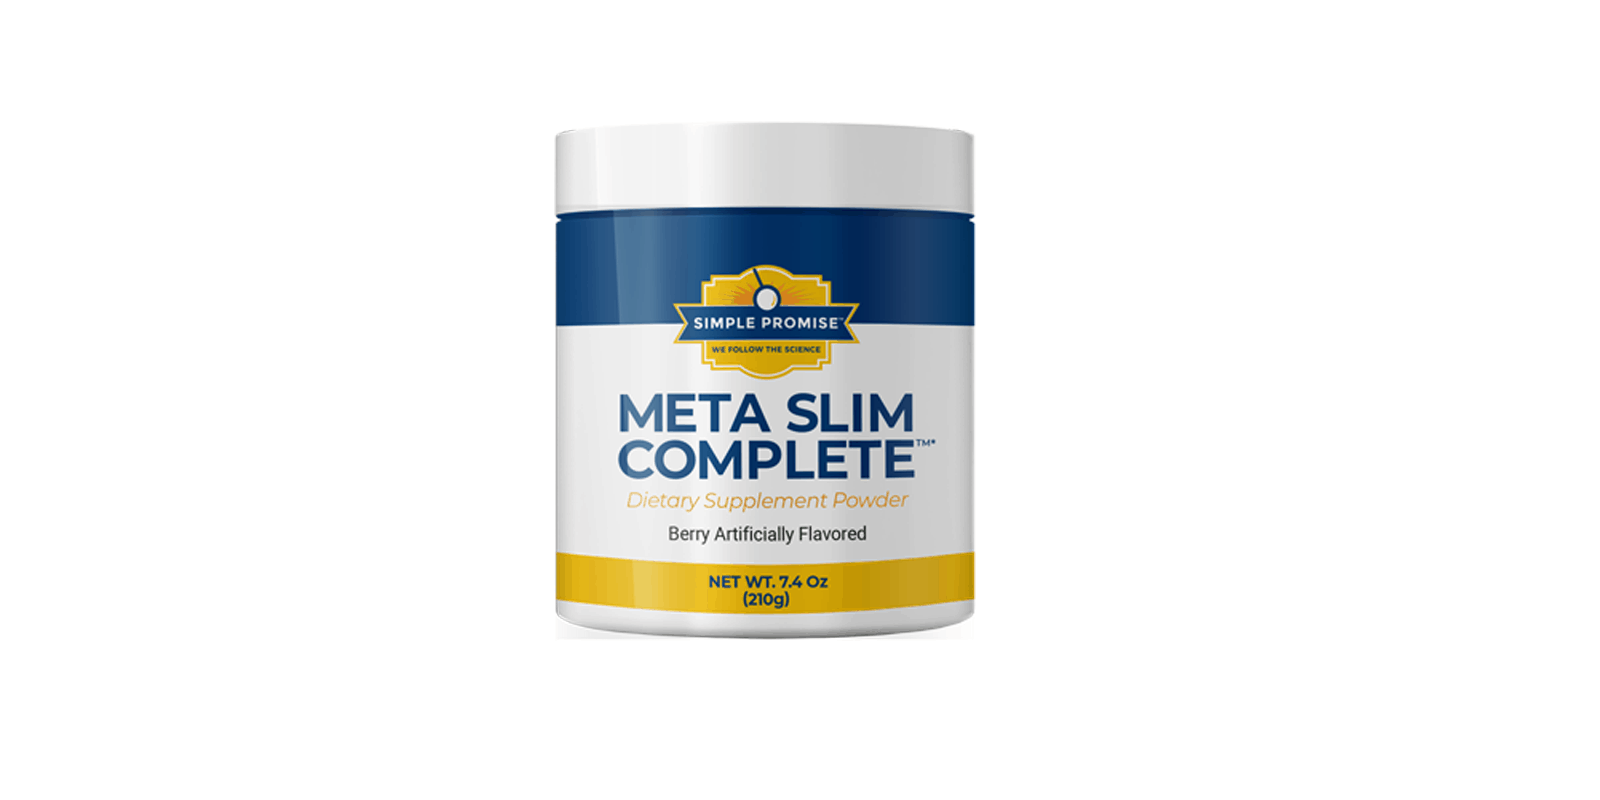 Meta Slim Complete reviews